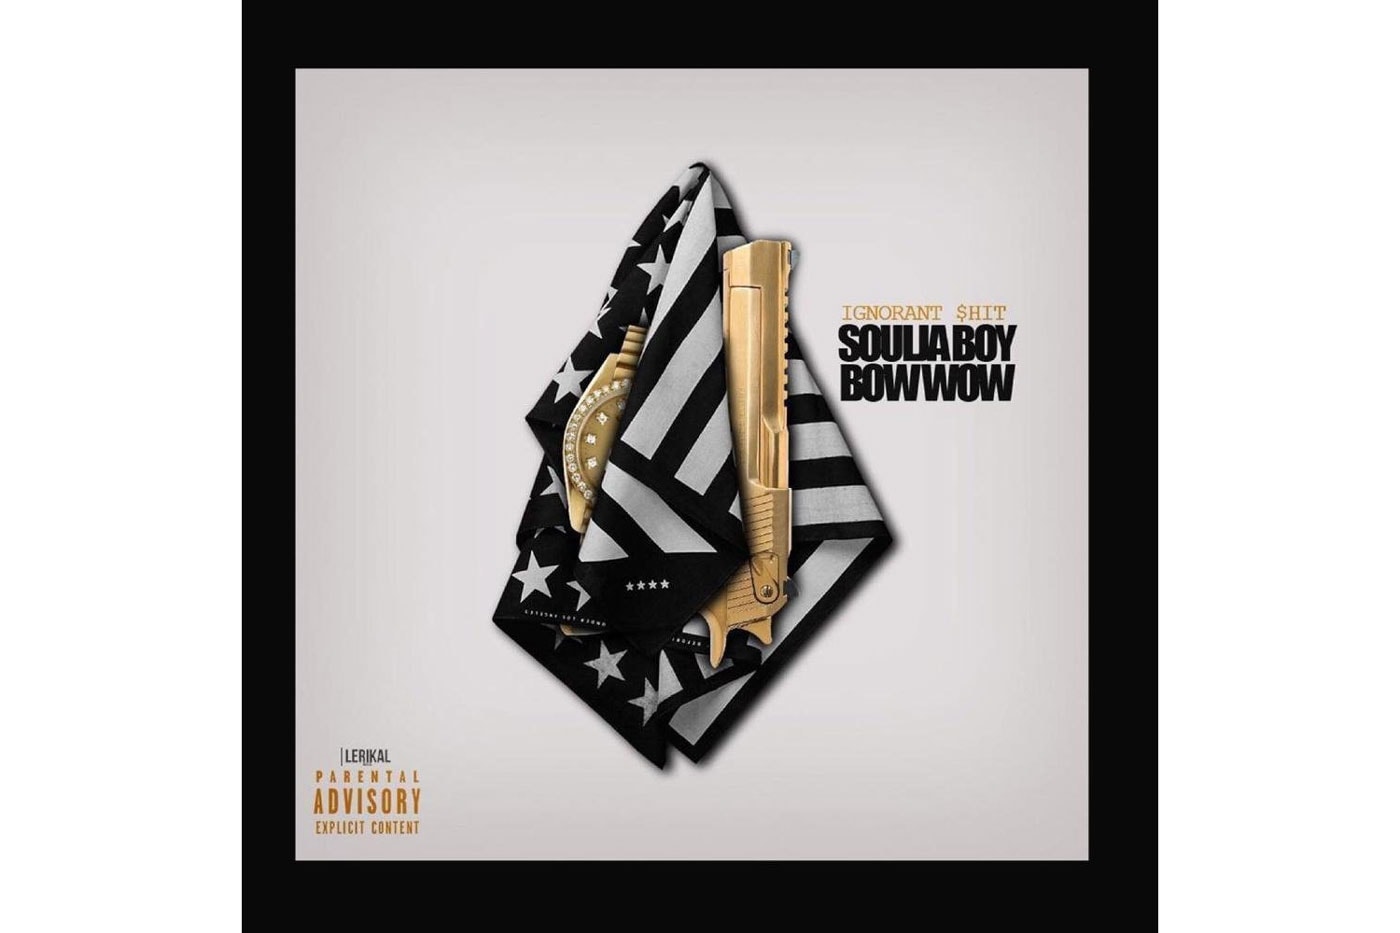 Soulja Boy Bow Wow Ignorant Shit Mixtape Download Stream